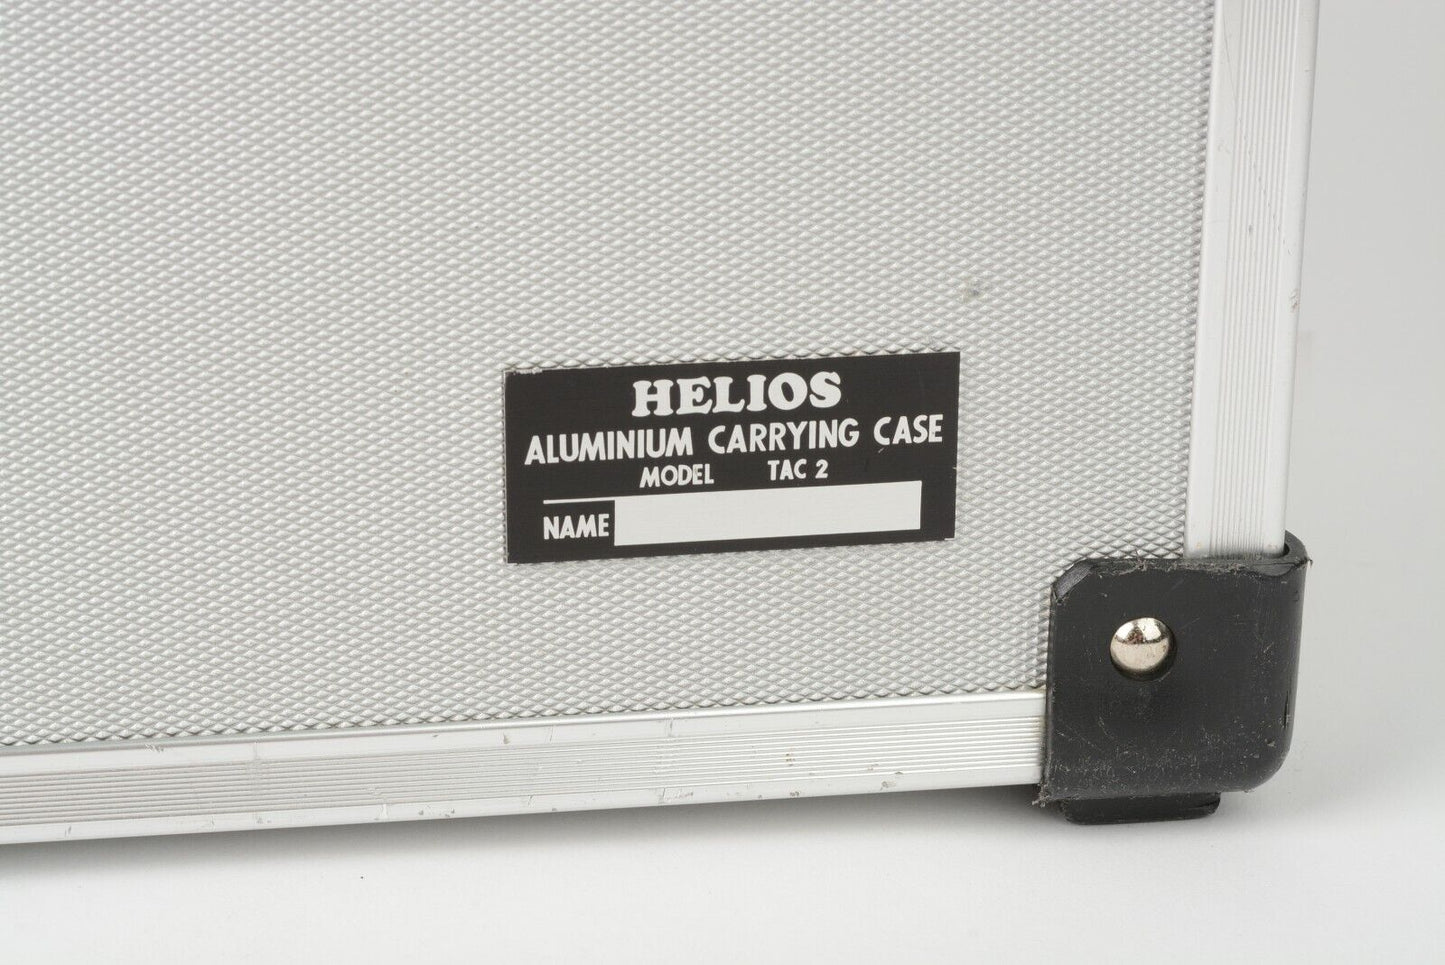 EXC++ HELIOS ALUMINUM HARD CAMERA CASE, LIGHT USE VERY CLEAN ~16 x 12 x6"